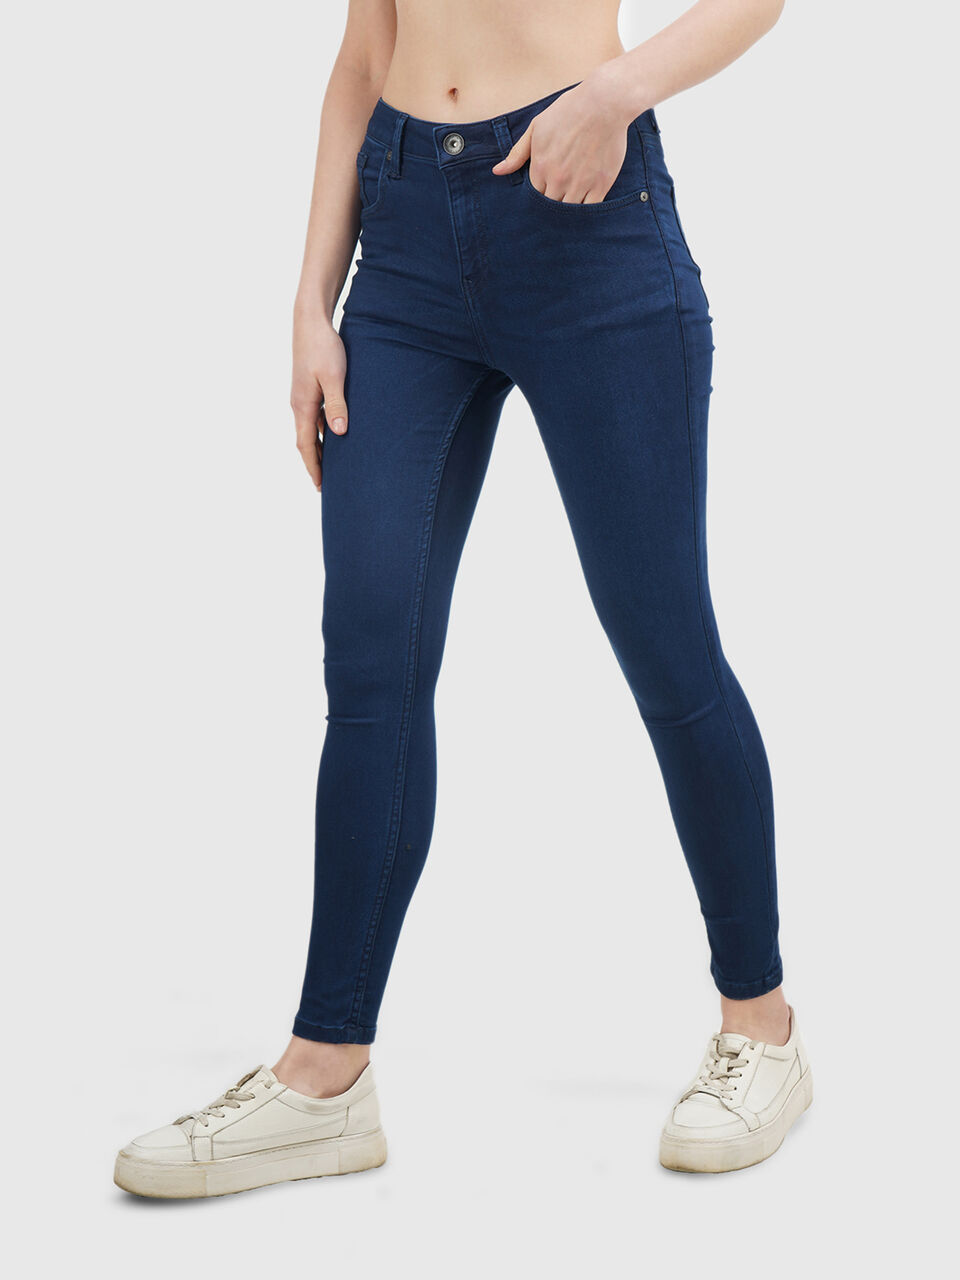 EUC BENETTON Stretch Skinny Girls Dark Blue Wash Denim Jeggings Pants Jeans  XL